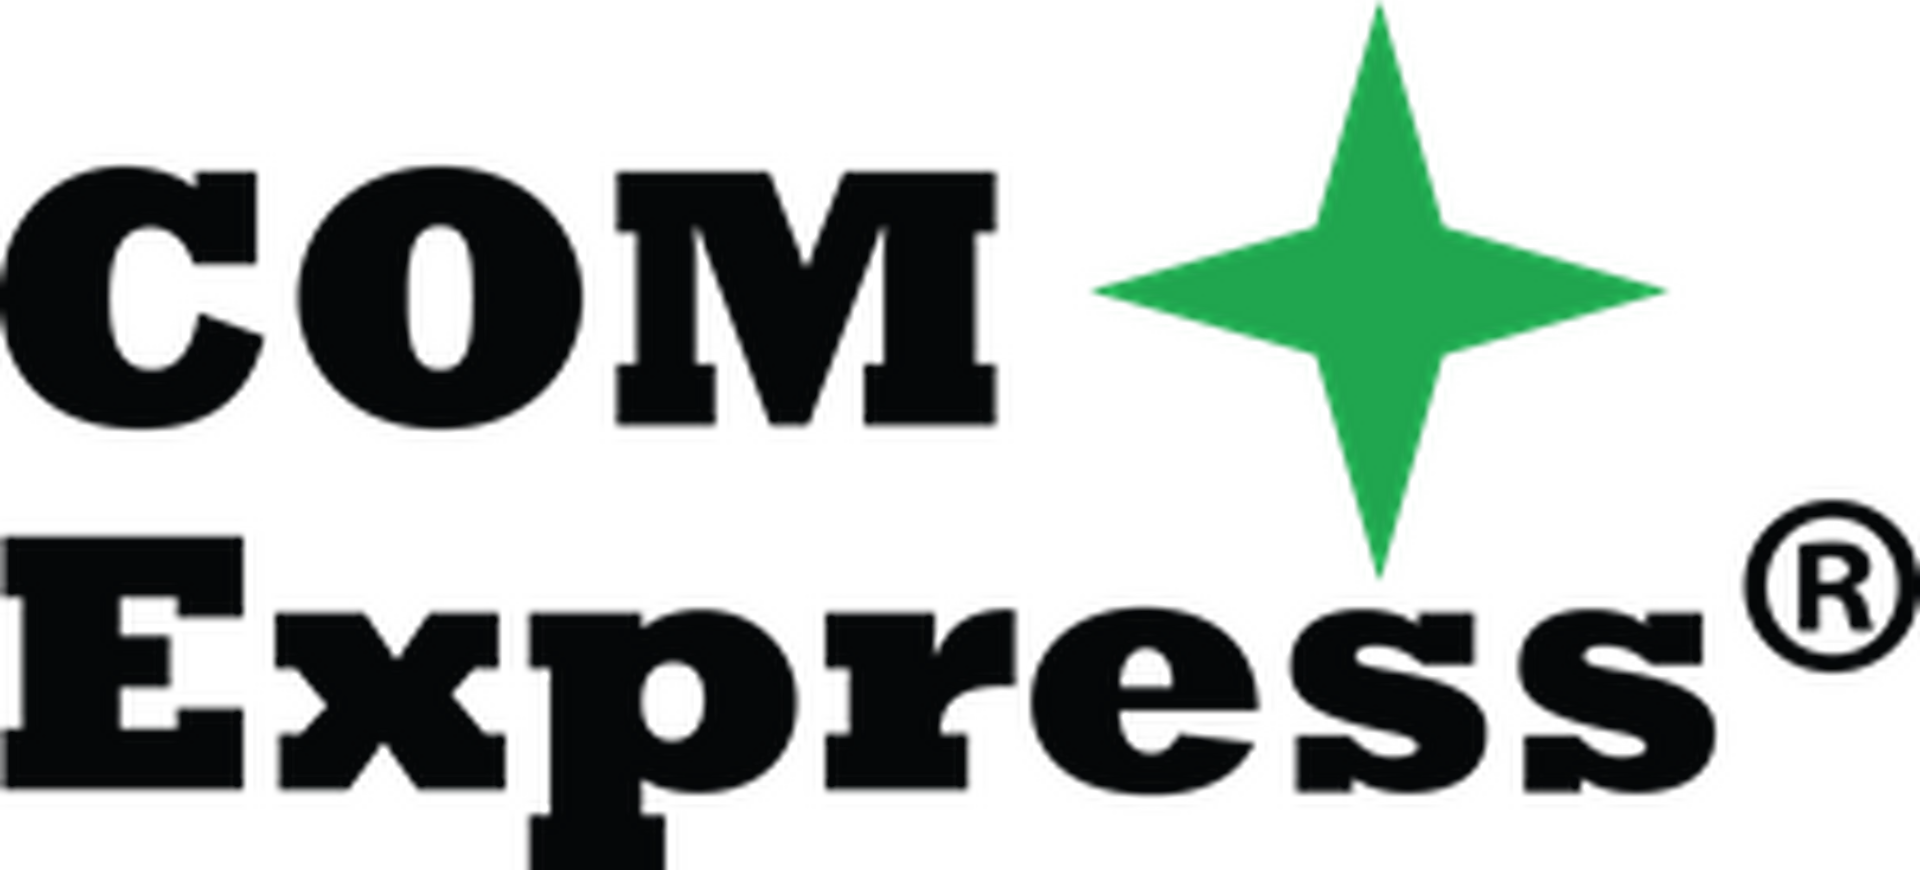 Com express logo DD120 D5 BDC seeklogo com